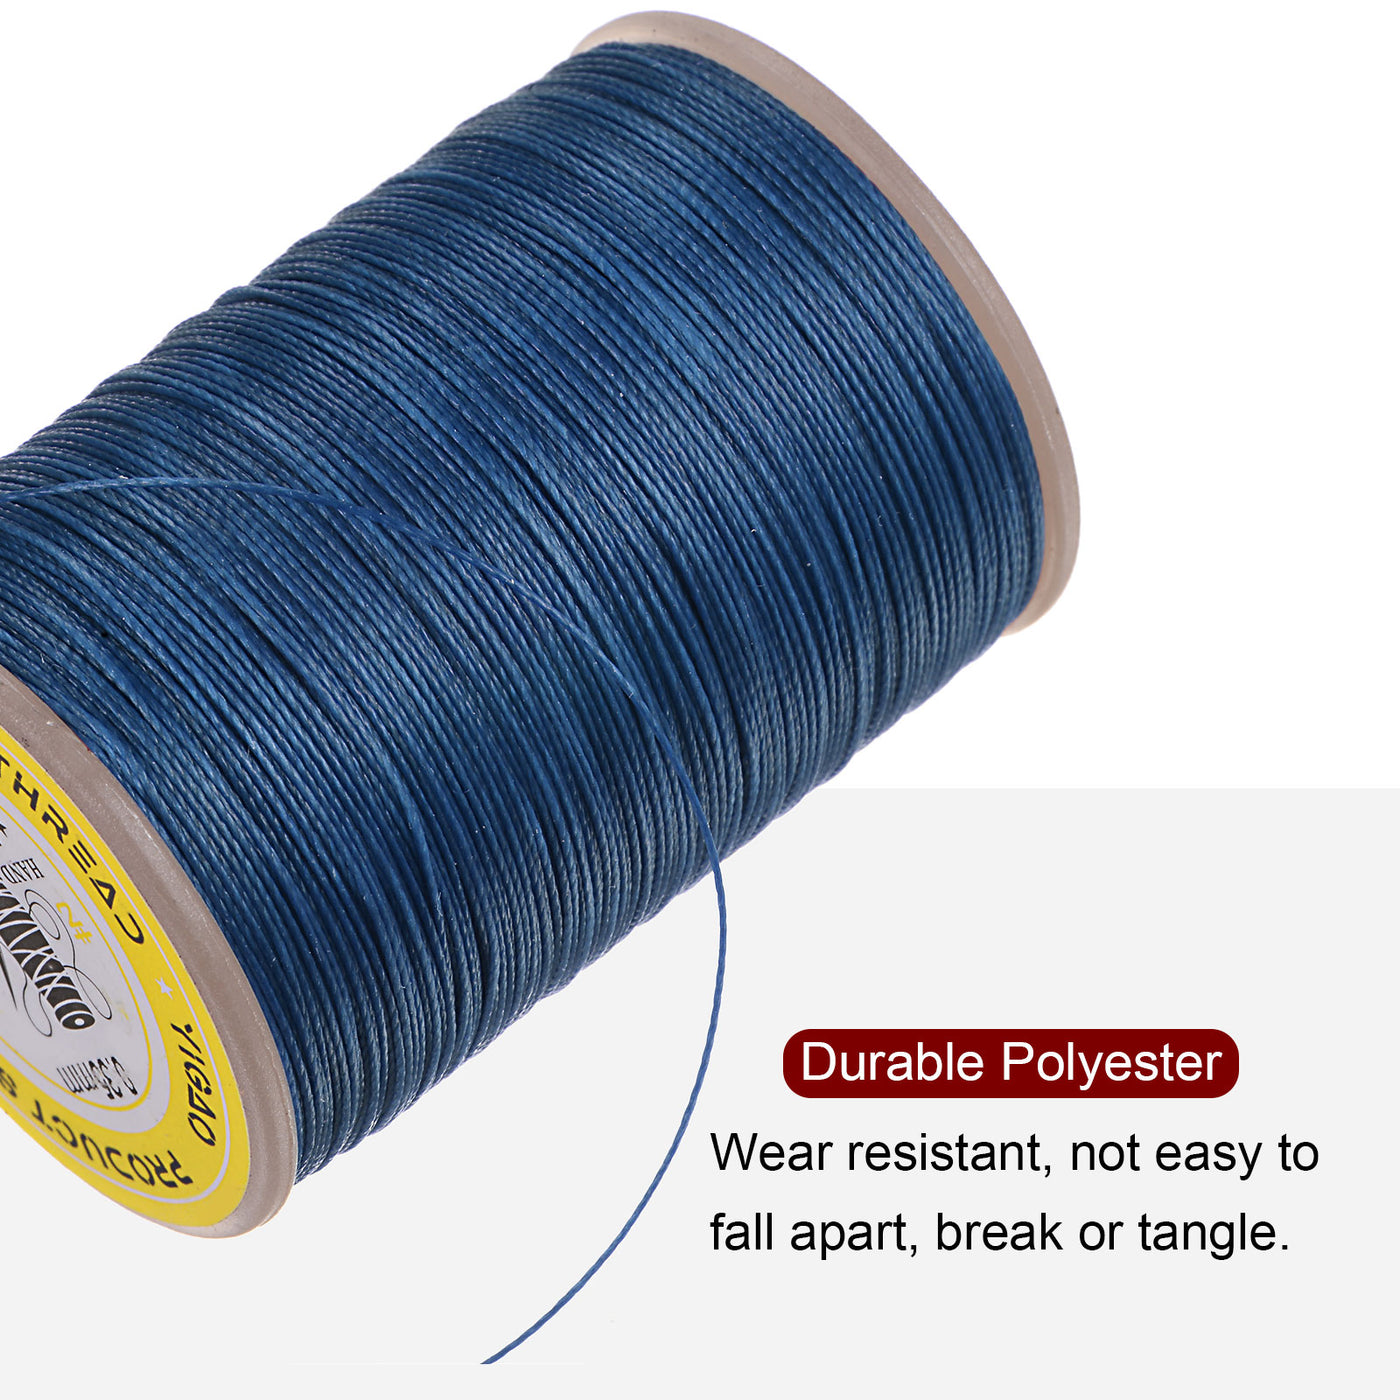 Harfington 2pcs Upholstery Sewing Thread 328 Yards 300m Polyester String Royalblue